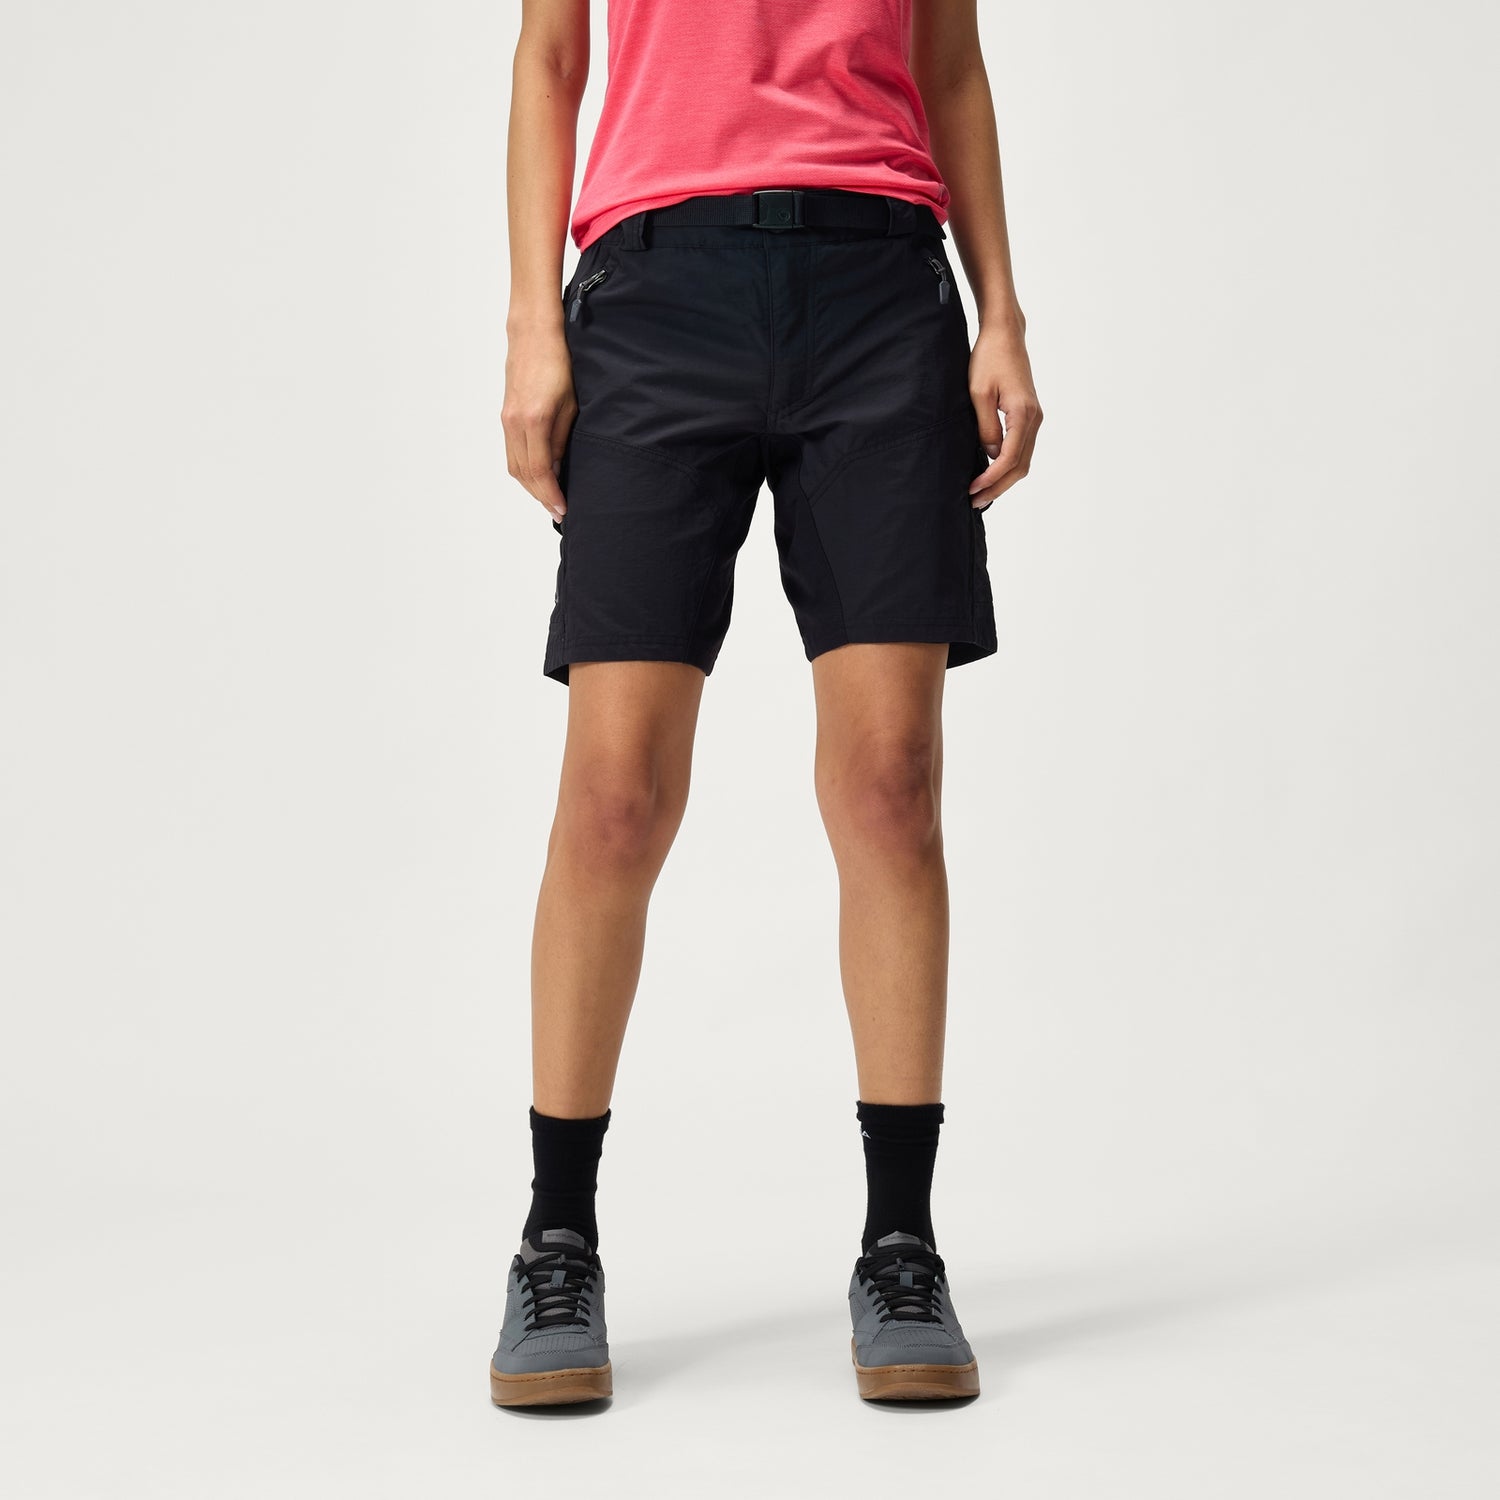 Women's Hummvee Short with Liner - Black - XL